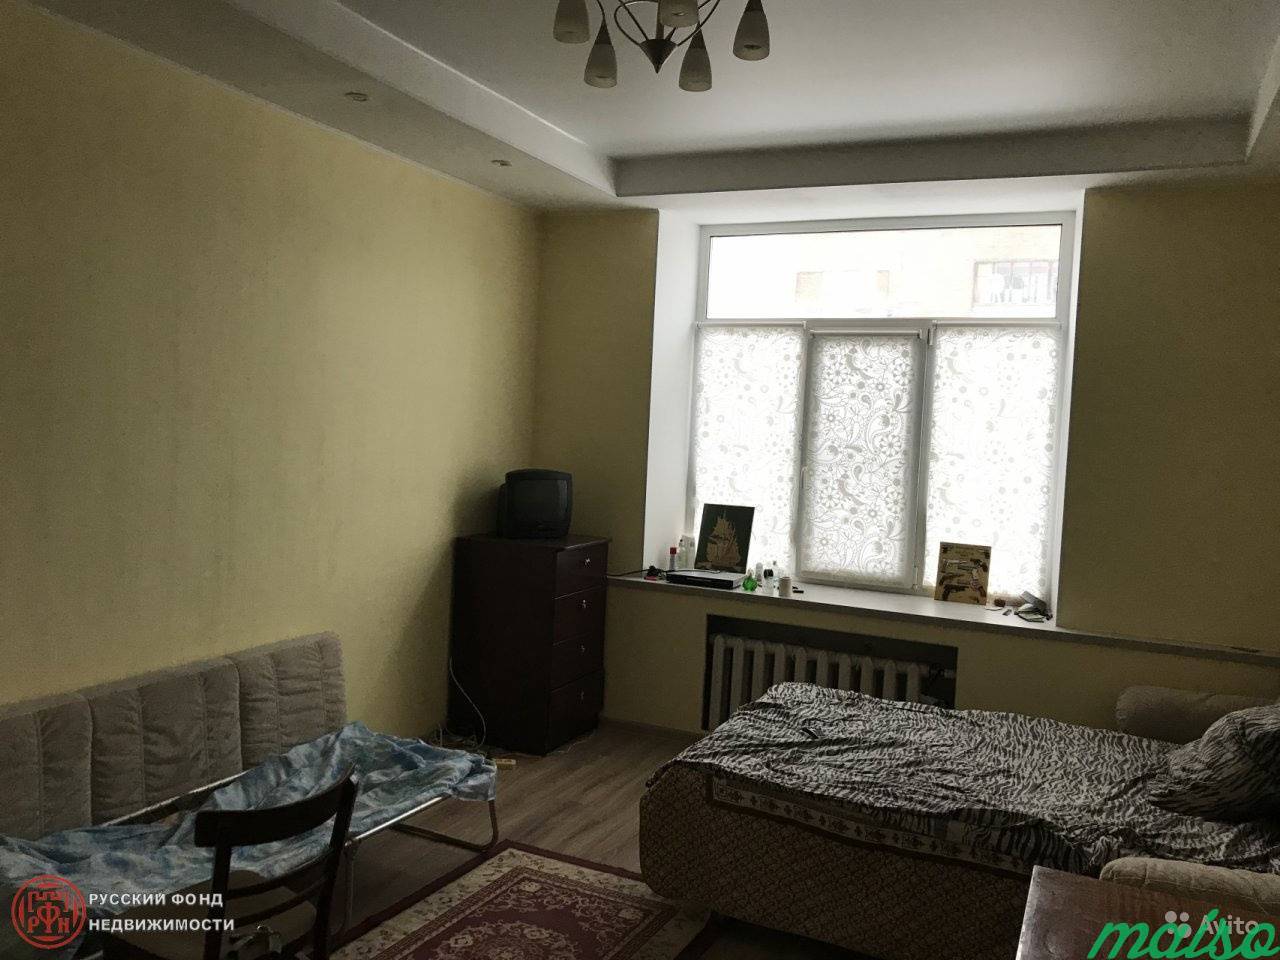 Комната 23 м² в 3-к, 3/4 эт. в Санкт-Петербурге. Фото 3